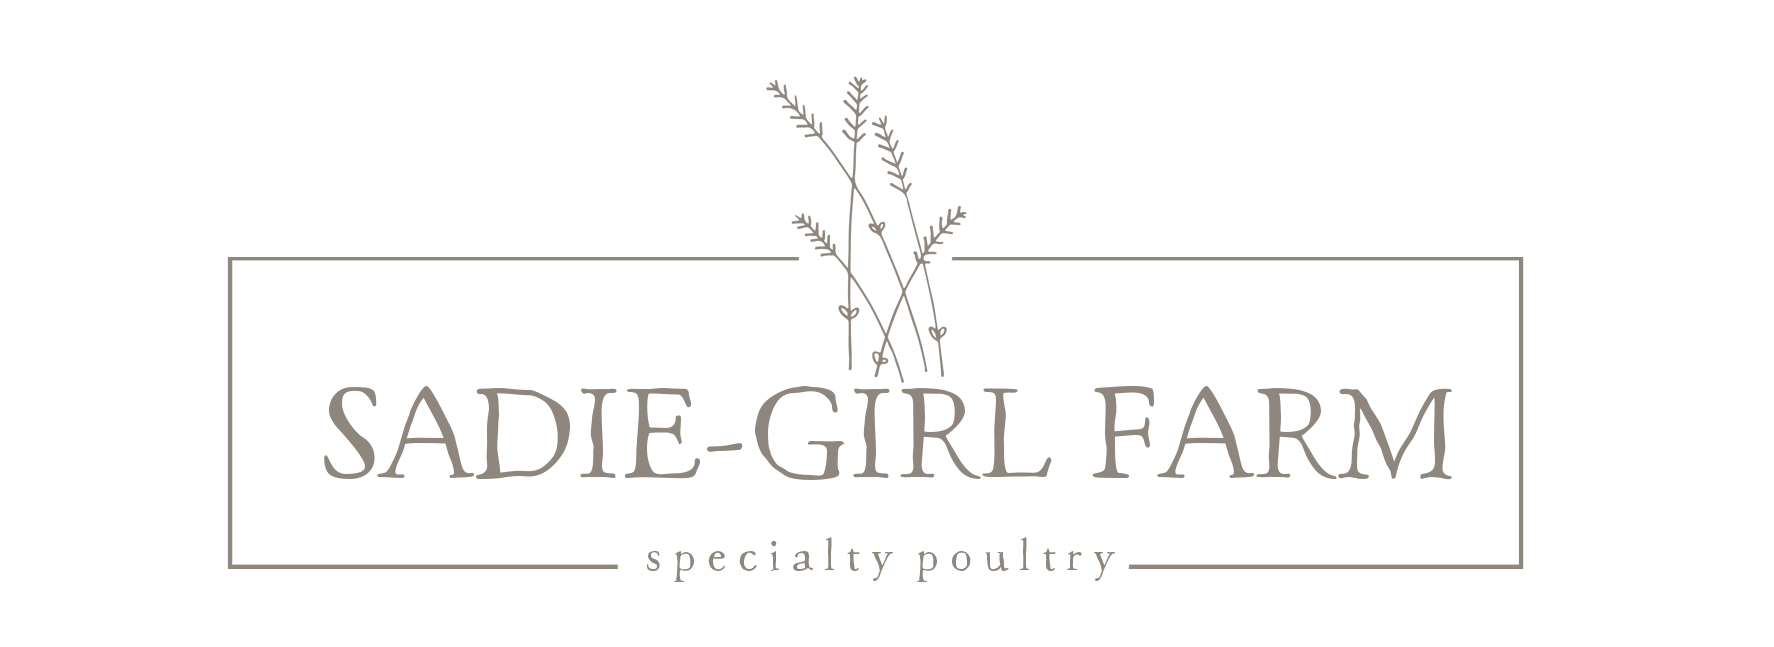 sadie girl farm